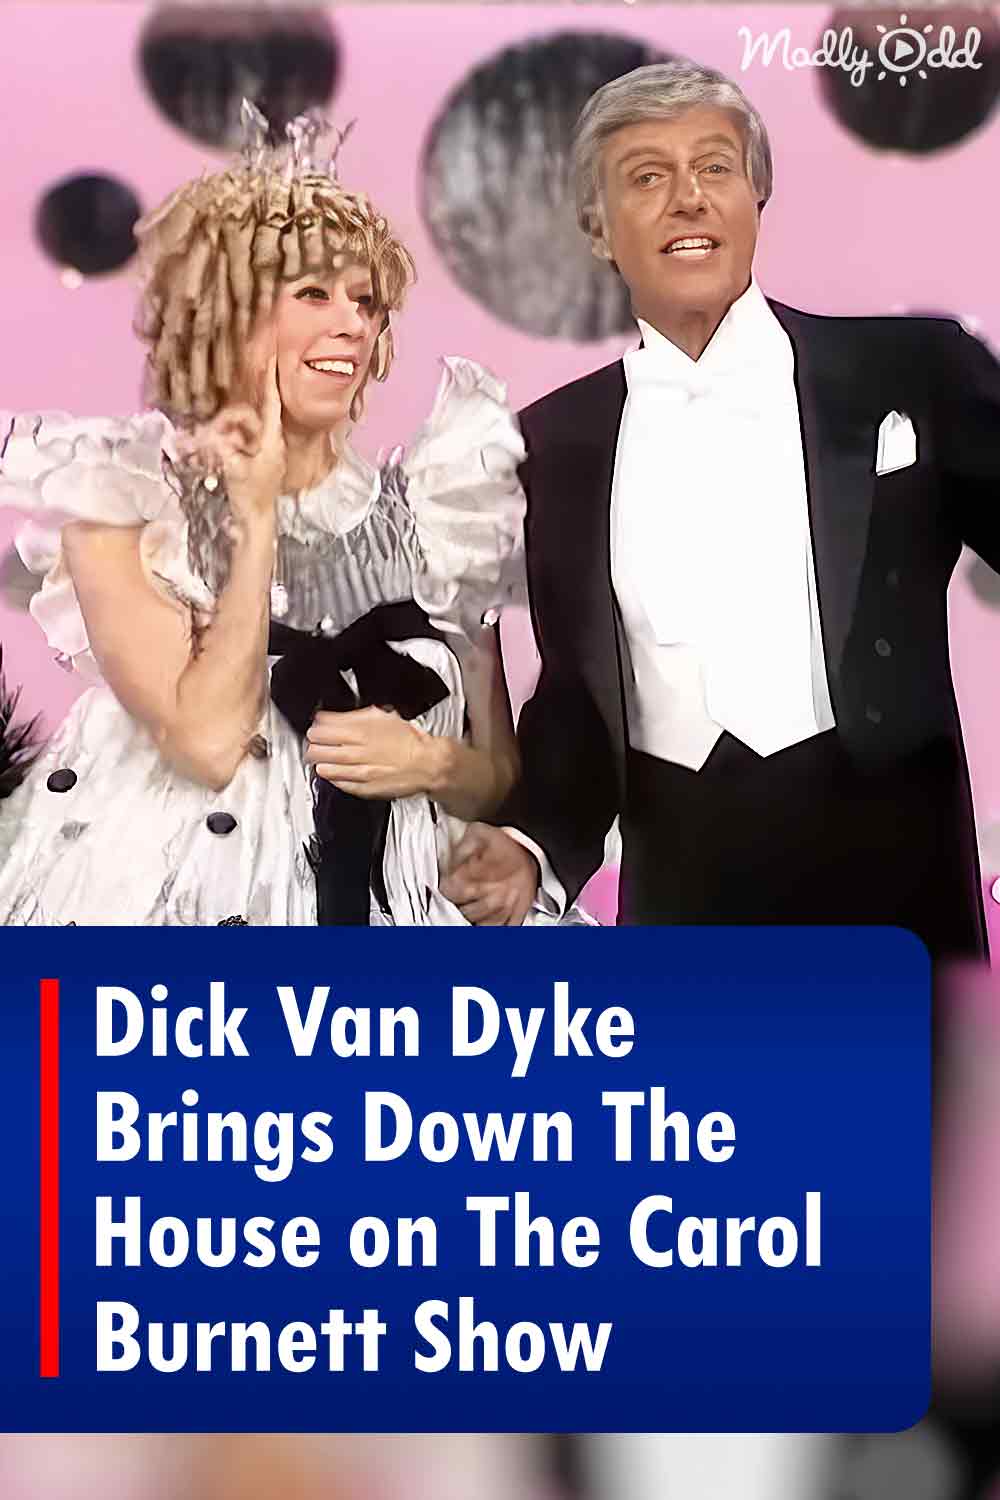 Dick Van Dyke Brings Down The House on The Carol Burnett Show